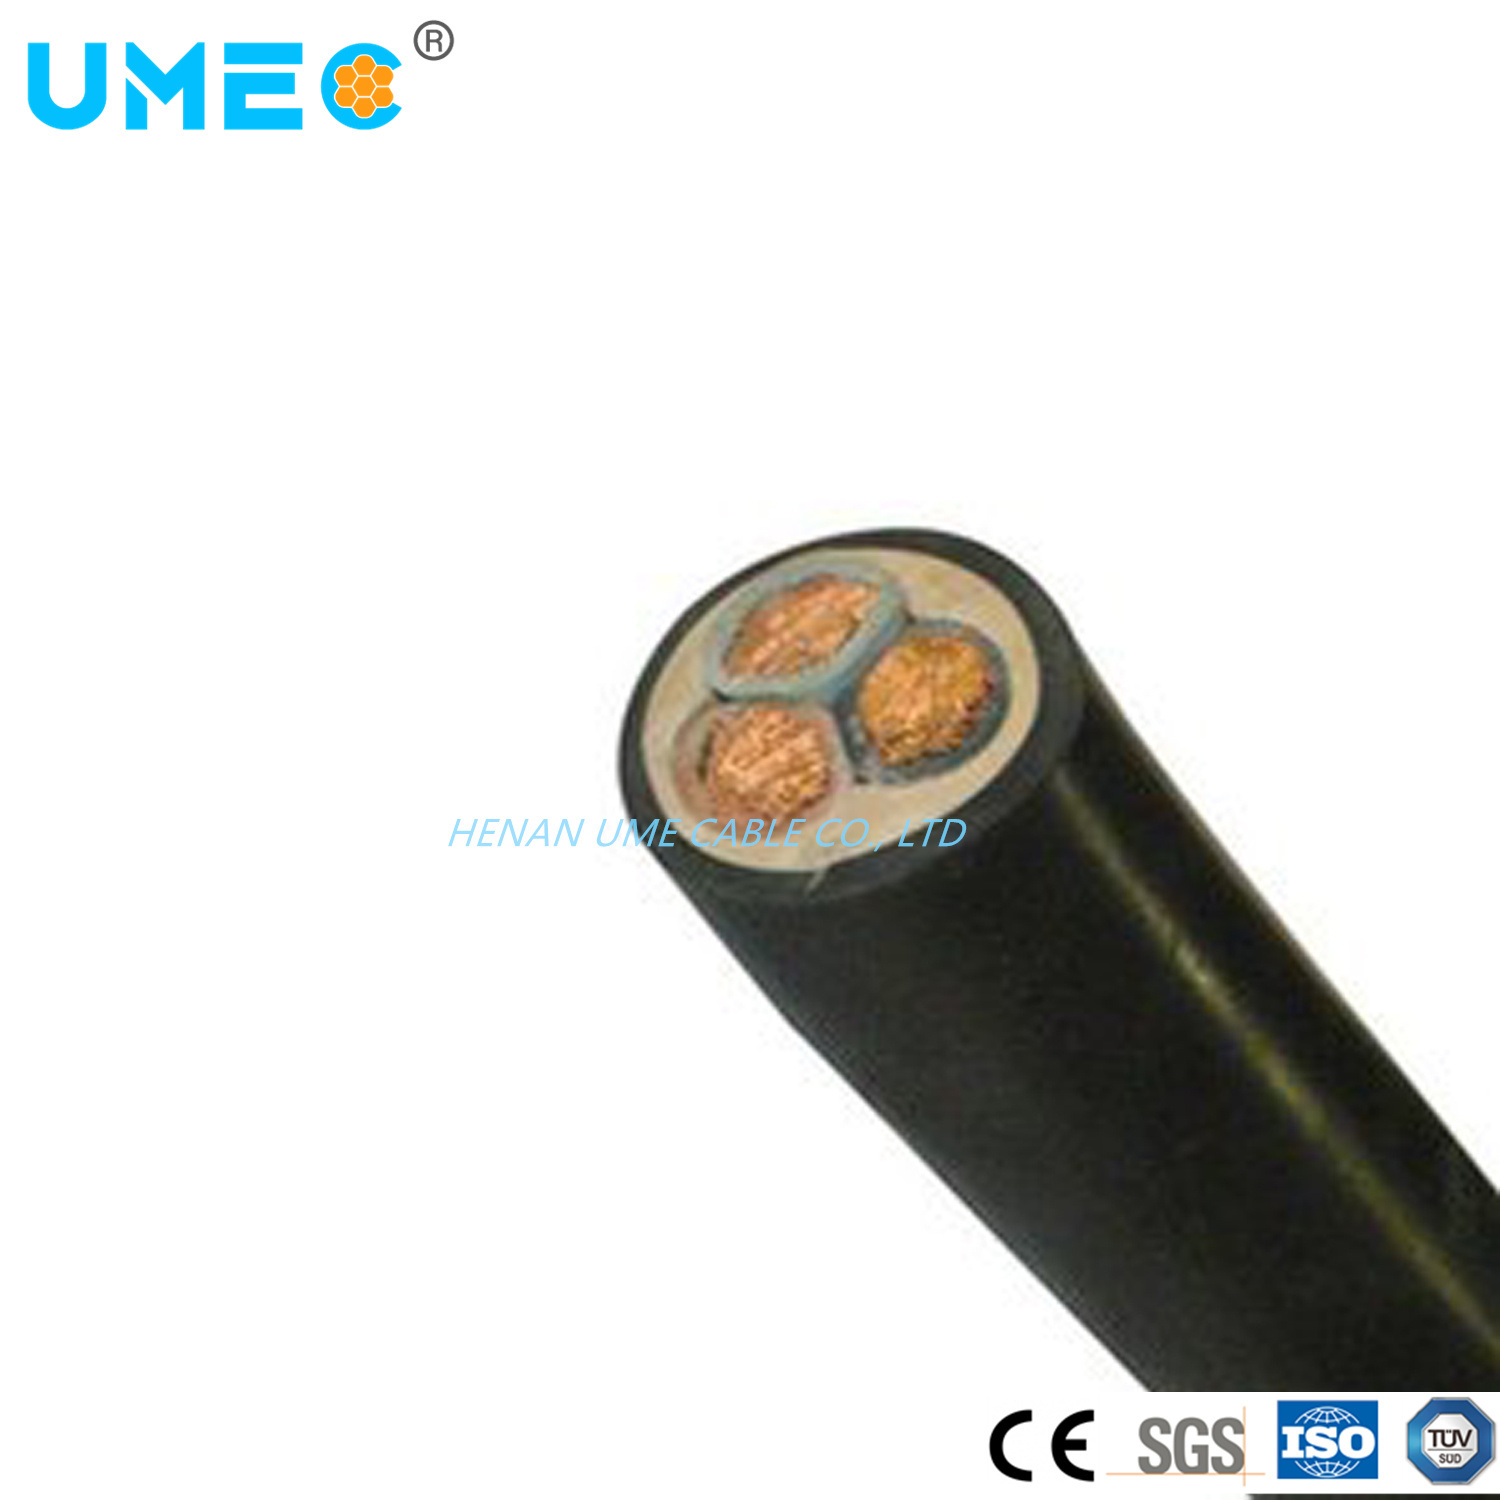 450/750V Electric Ethylene Propylene Polychloroprene Rubber 0.75mm2 1mm2 H07nn (RN) -F Copper Cable Wire